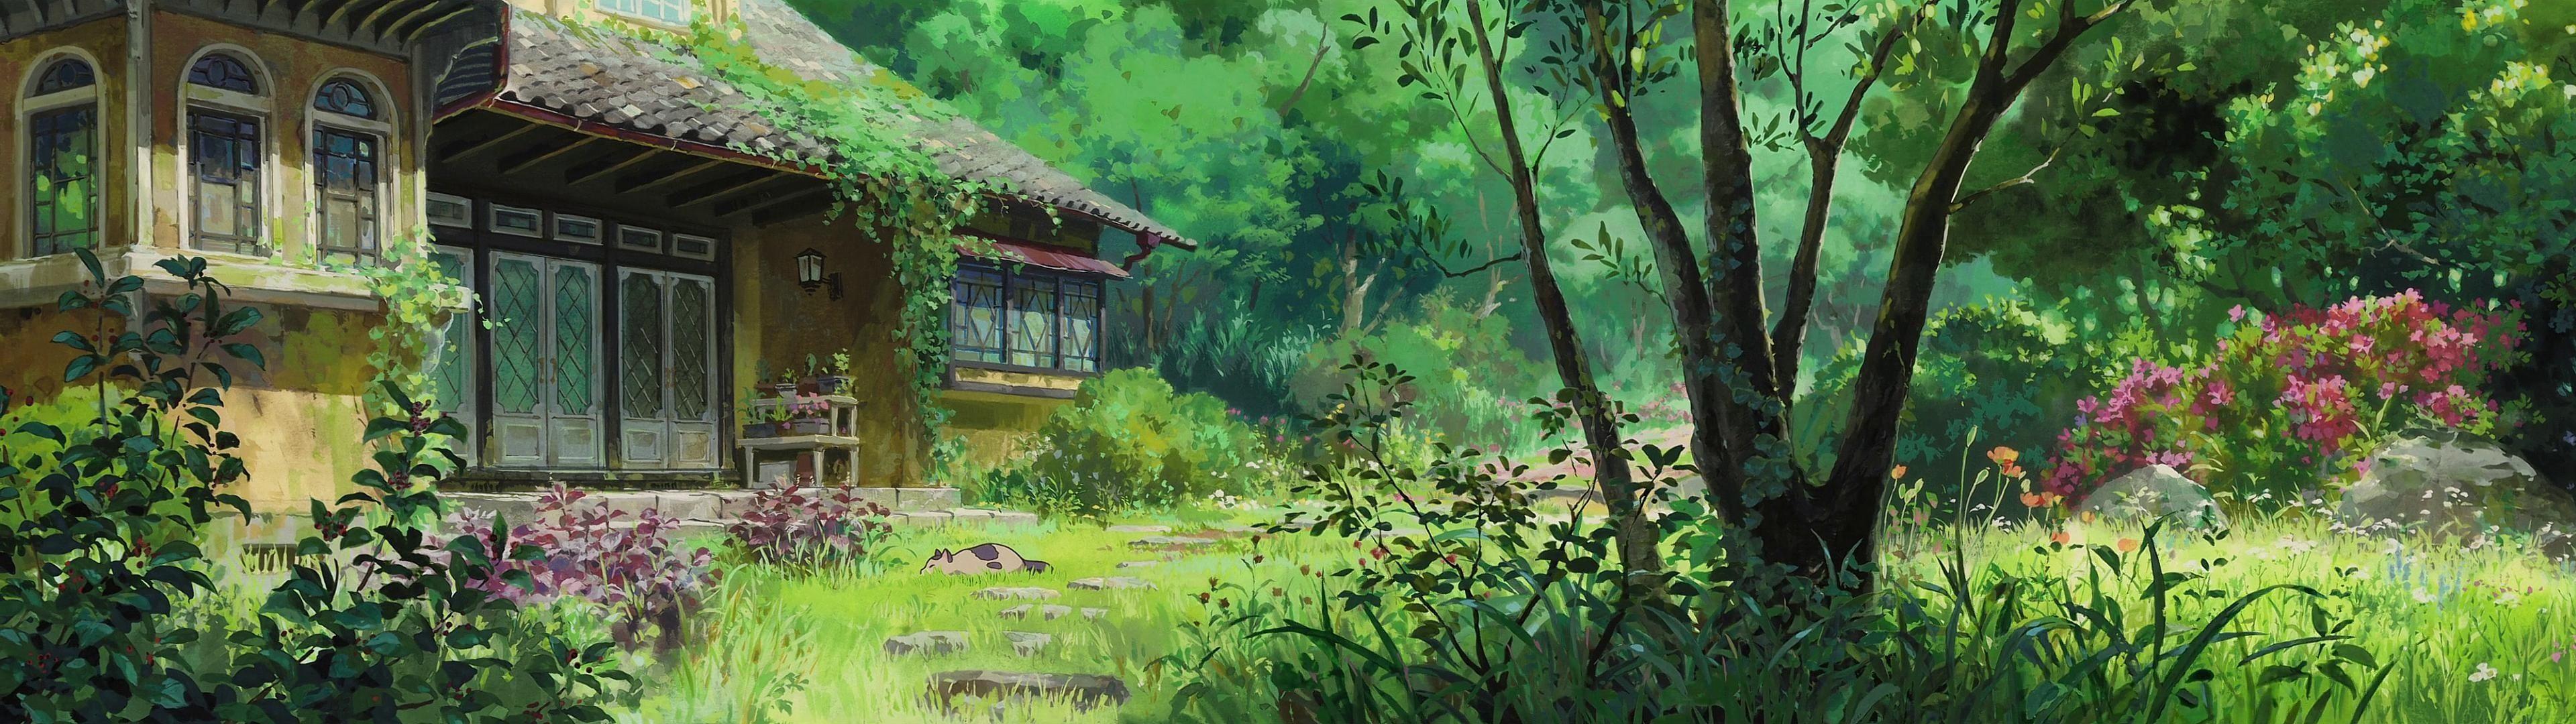 3840x1080 10 Most Popular Studio Ghibli Dual Monitor Wallpaper FULL HD 1920&Atilde;&#151;1080 For PC Desktop | Studio ghibli background, Anime scenery, Ghibli art